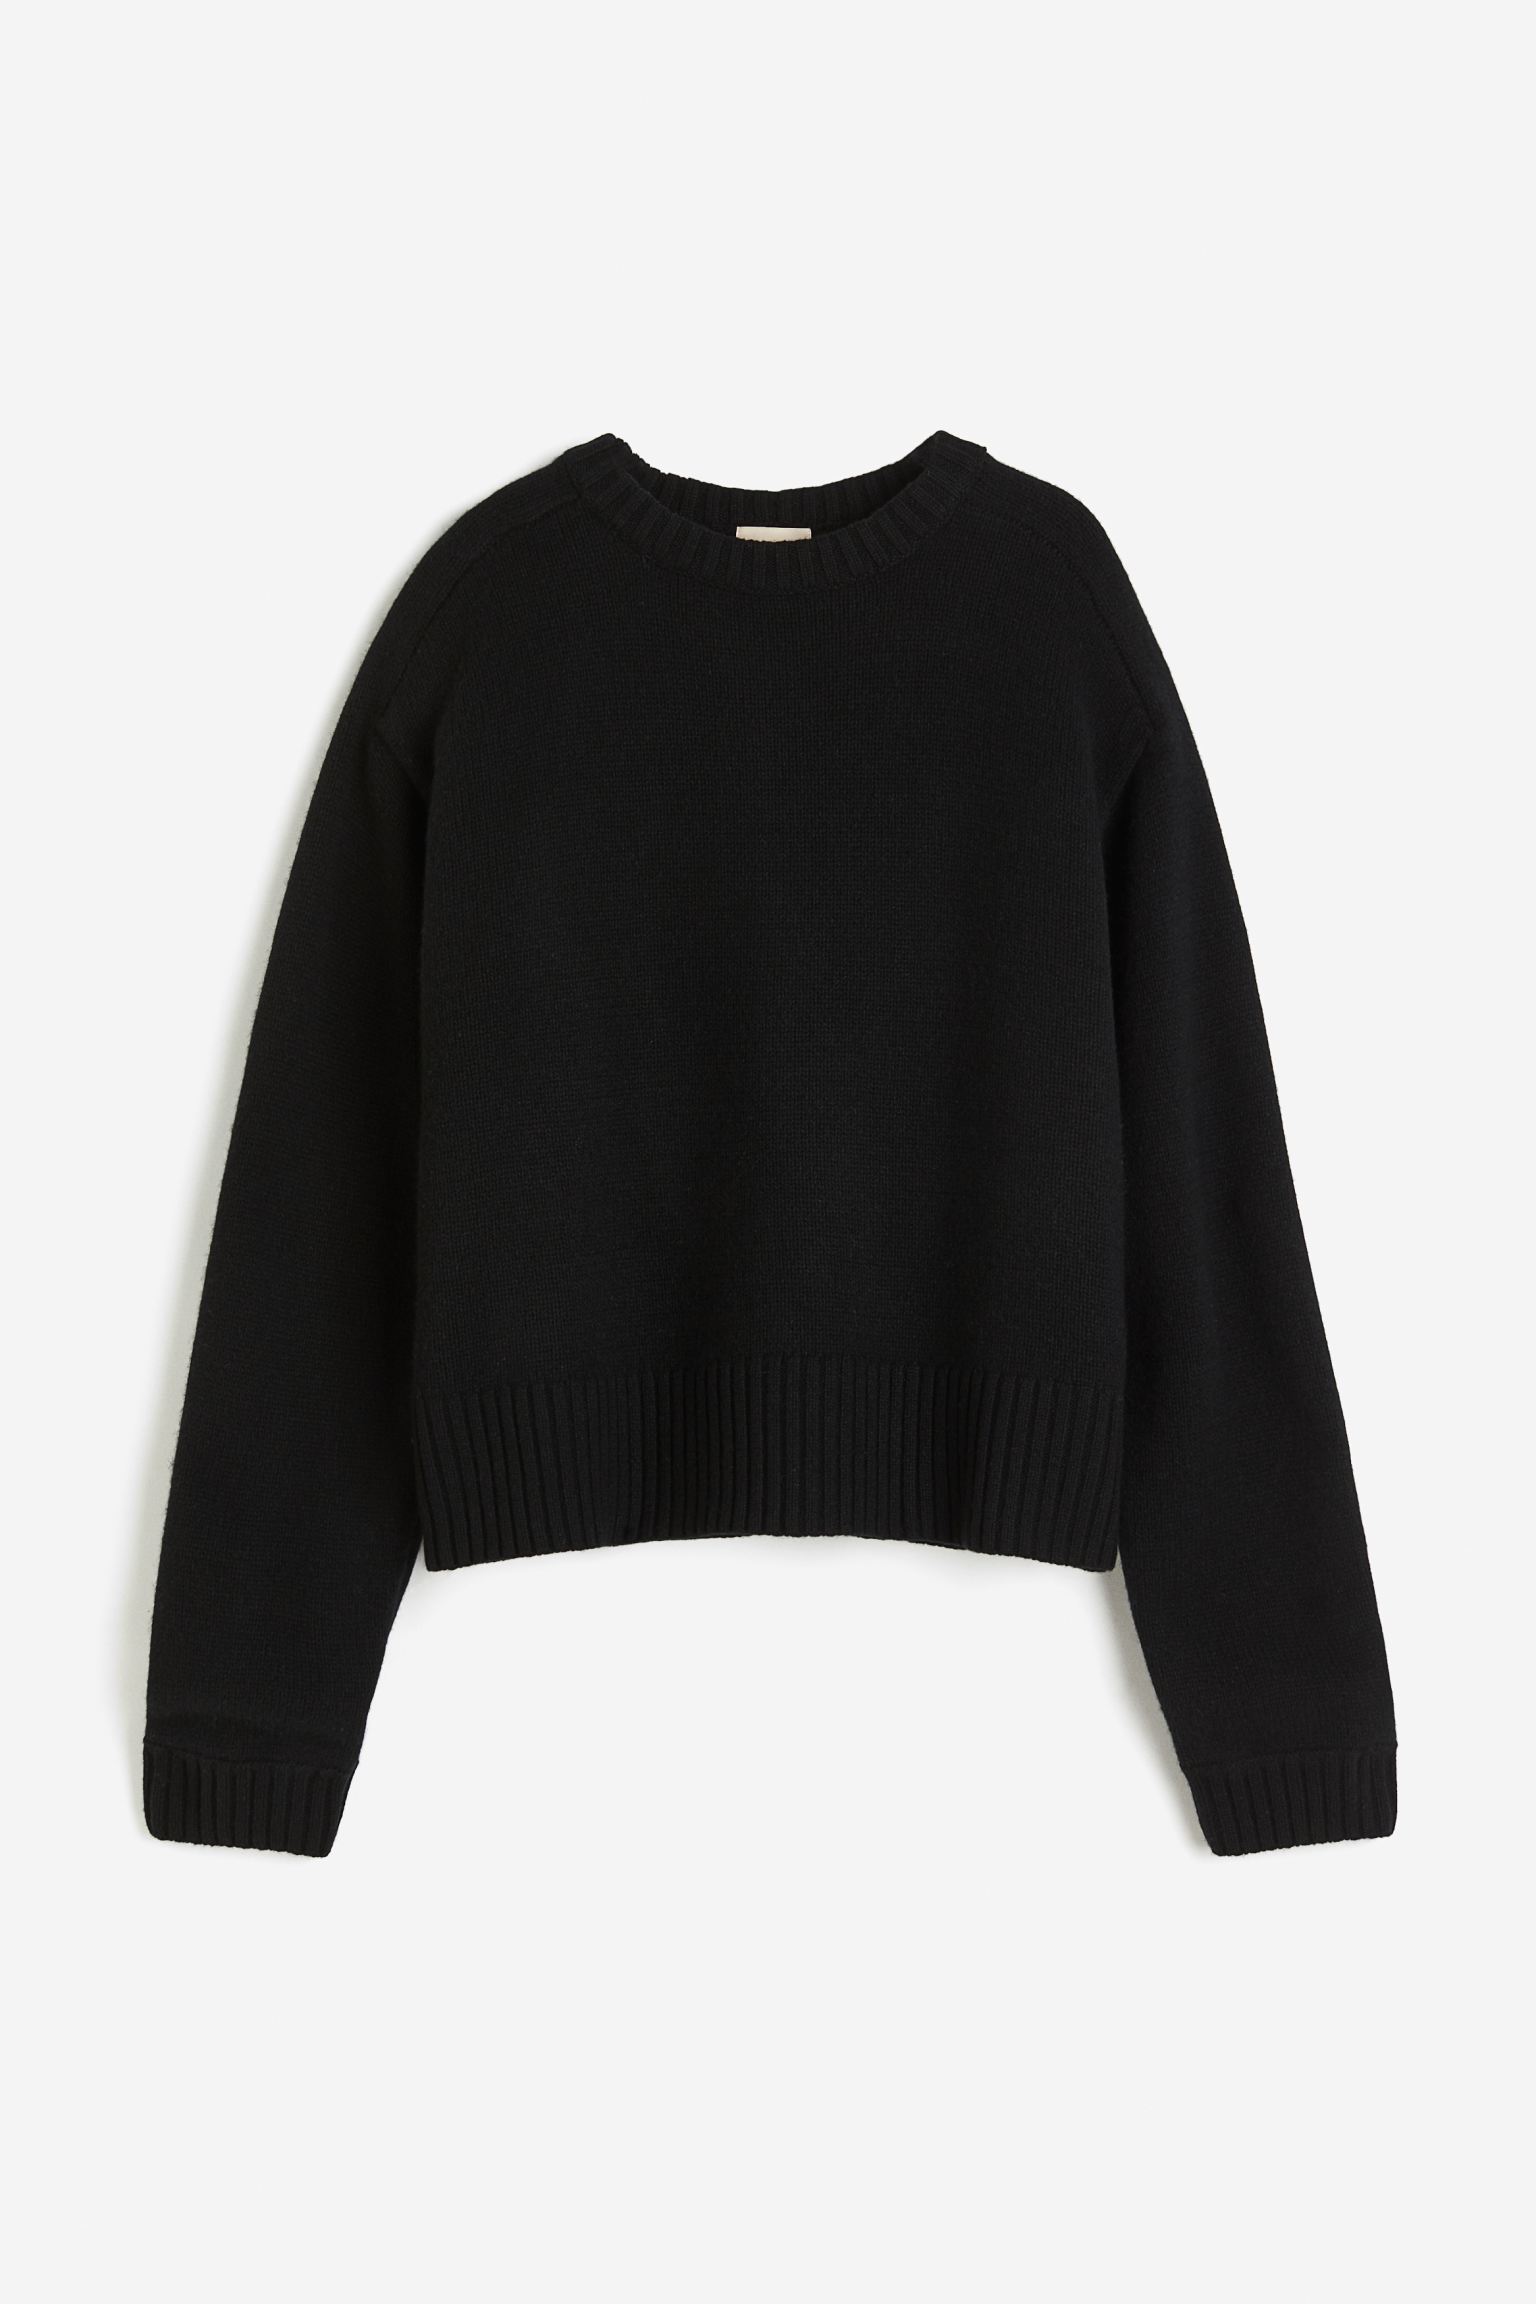 Свитер H&M Wool Blend, черный свитер zara wool blend черный